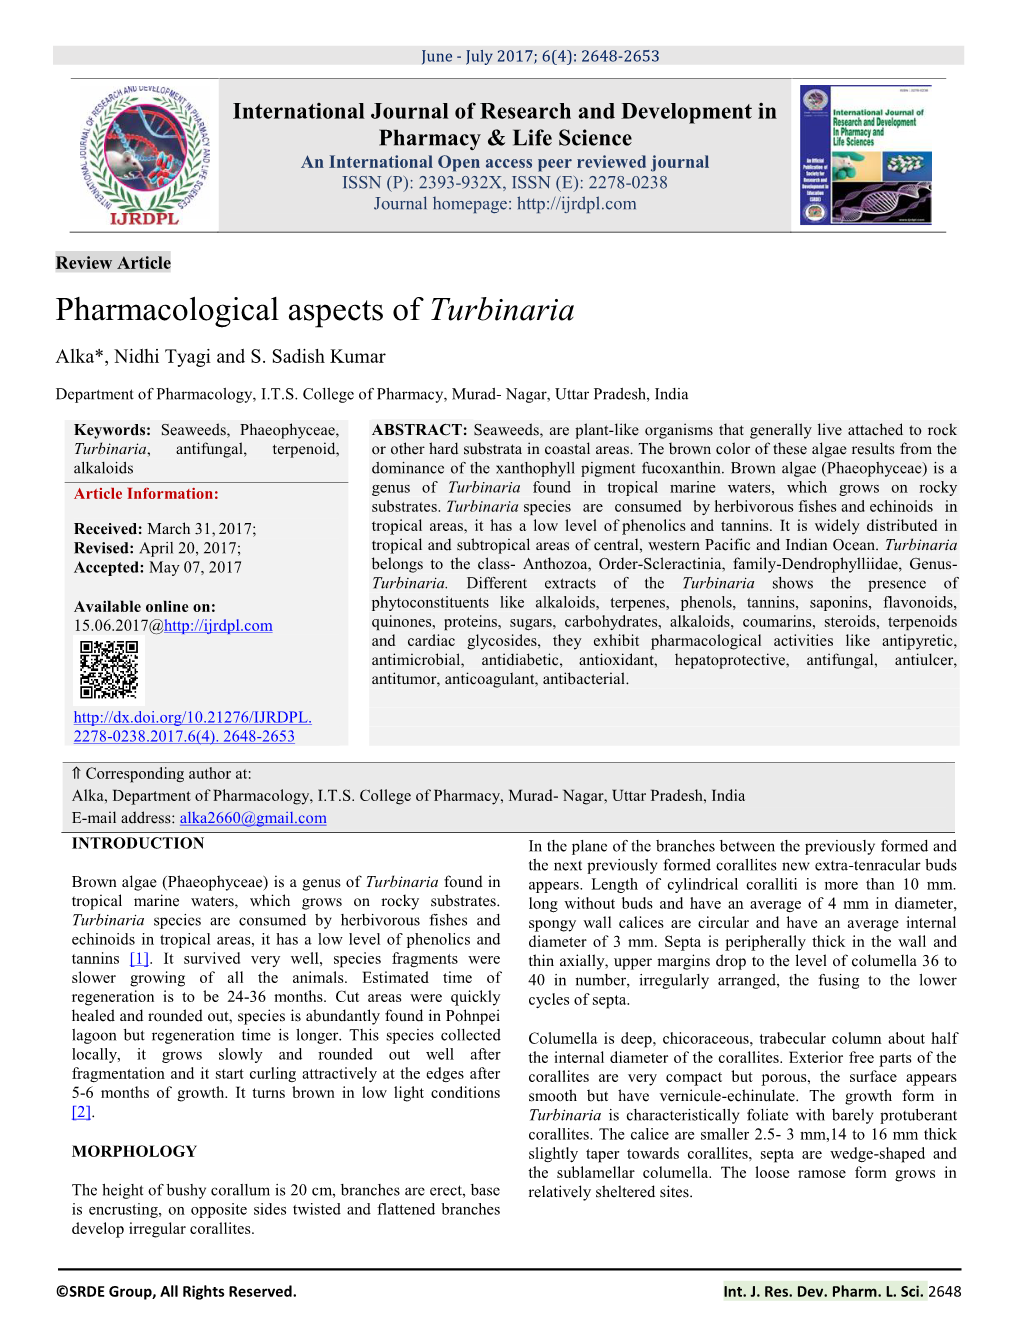 Pharmacological Aspects of Turbinari Gical Aspects of Turbinaria